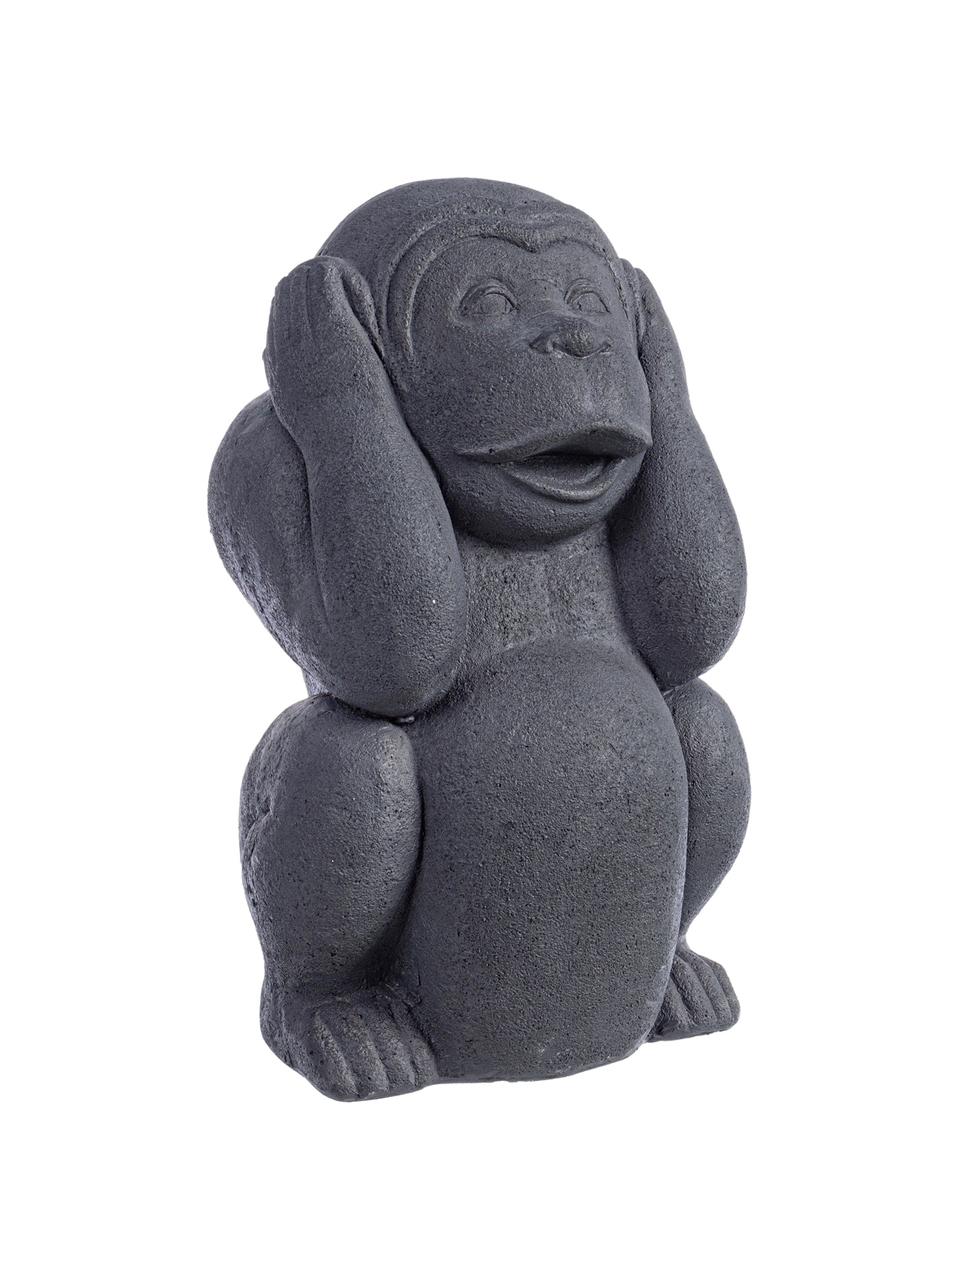 Deko-Objekt Monkey aus Beton, Beton, beschichtet, Nichts-Böses-Hören-Affe, B 22 x H 36 cm